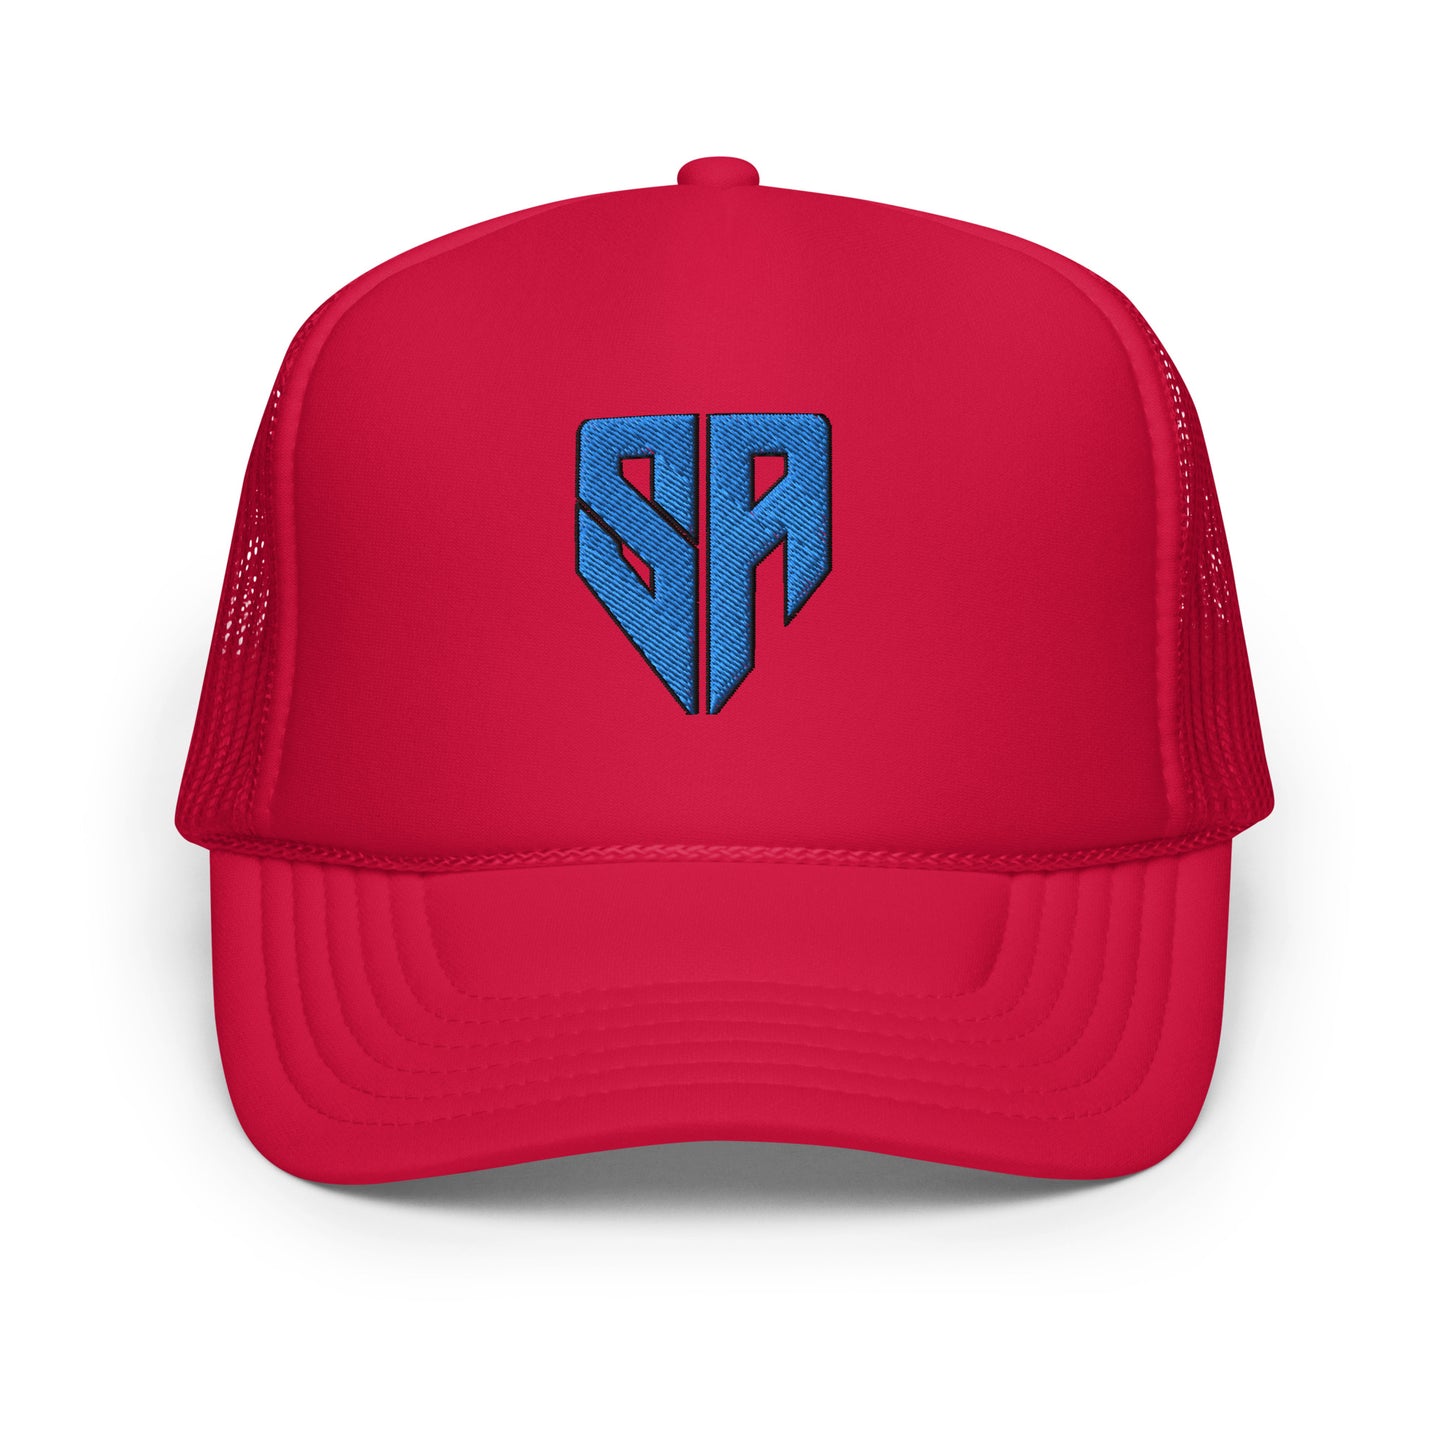 Samson Aletan Foam trucker hat